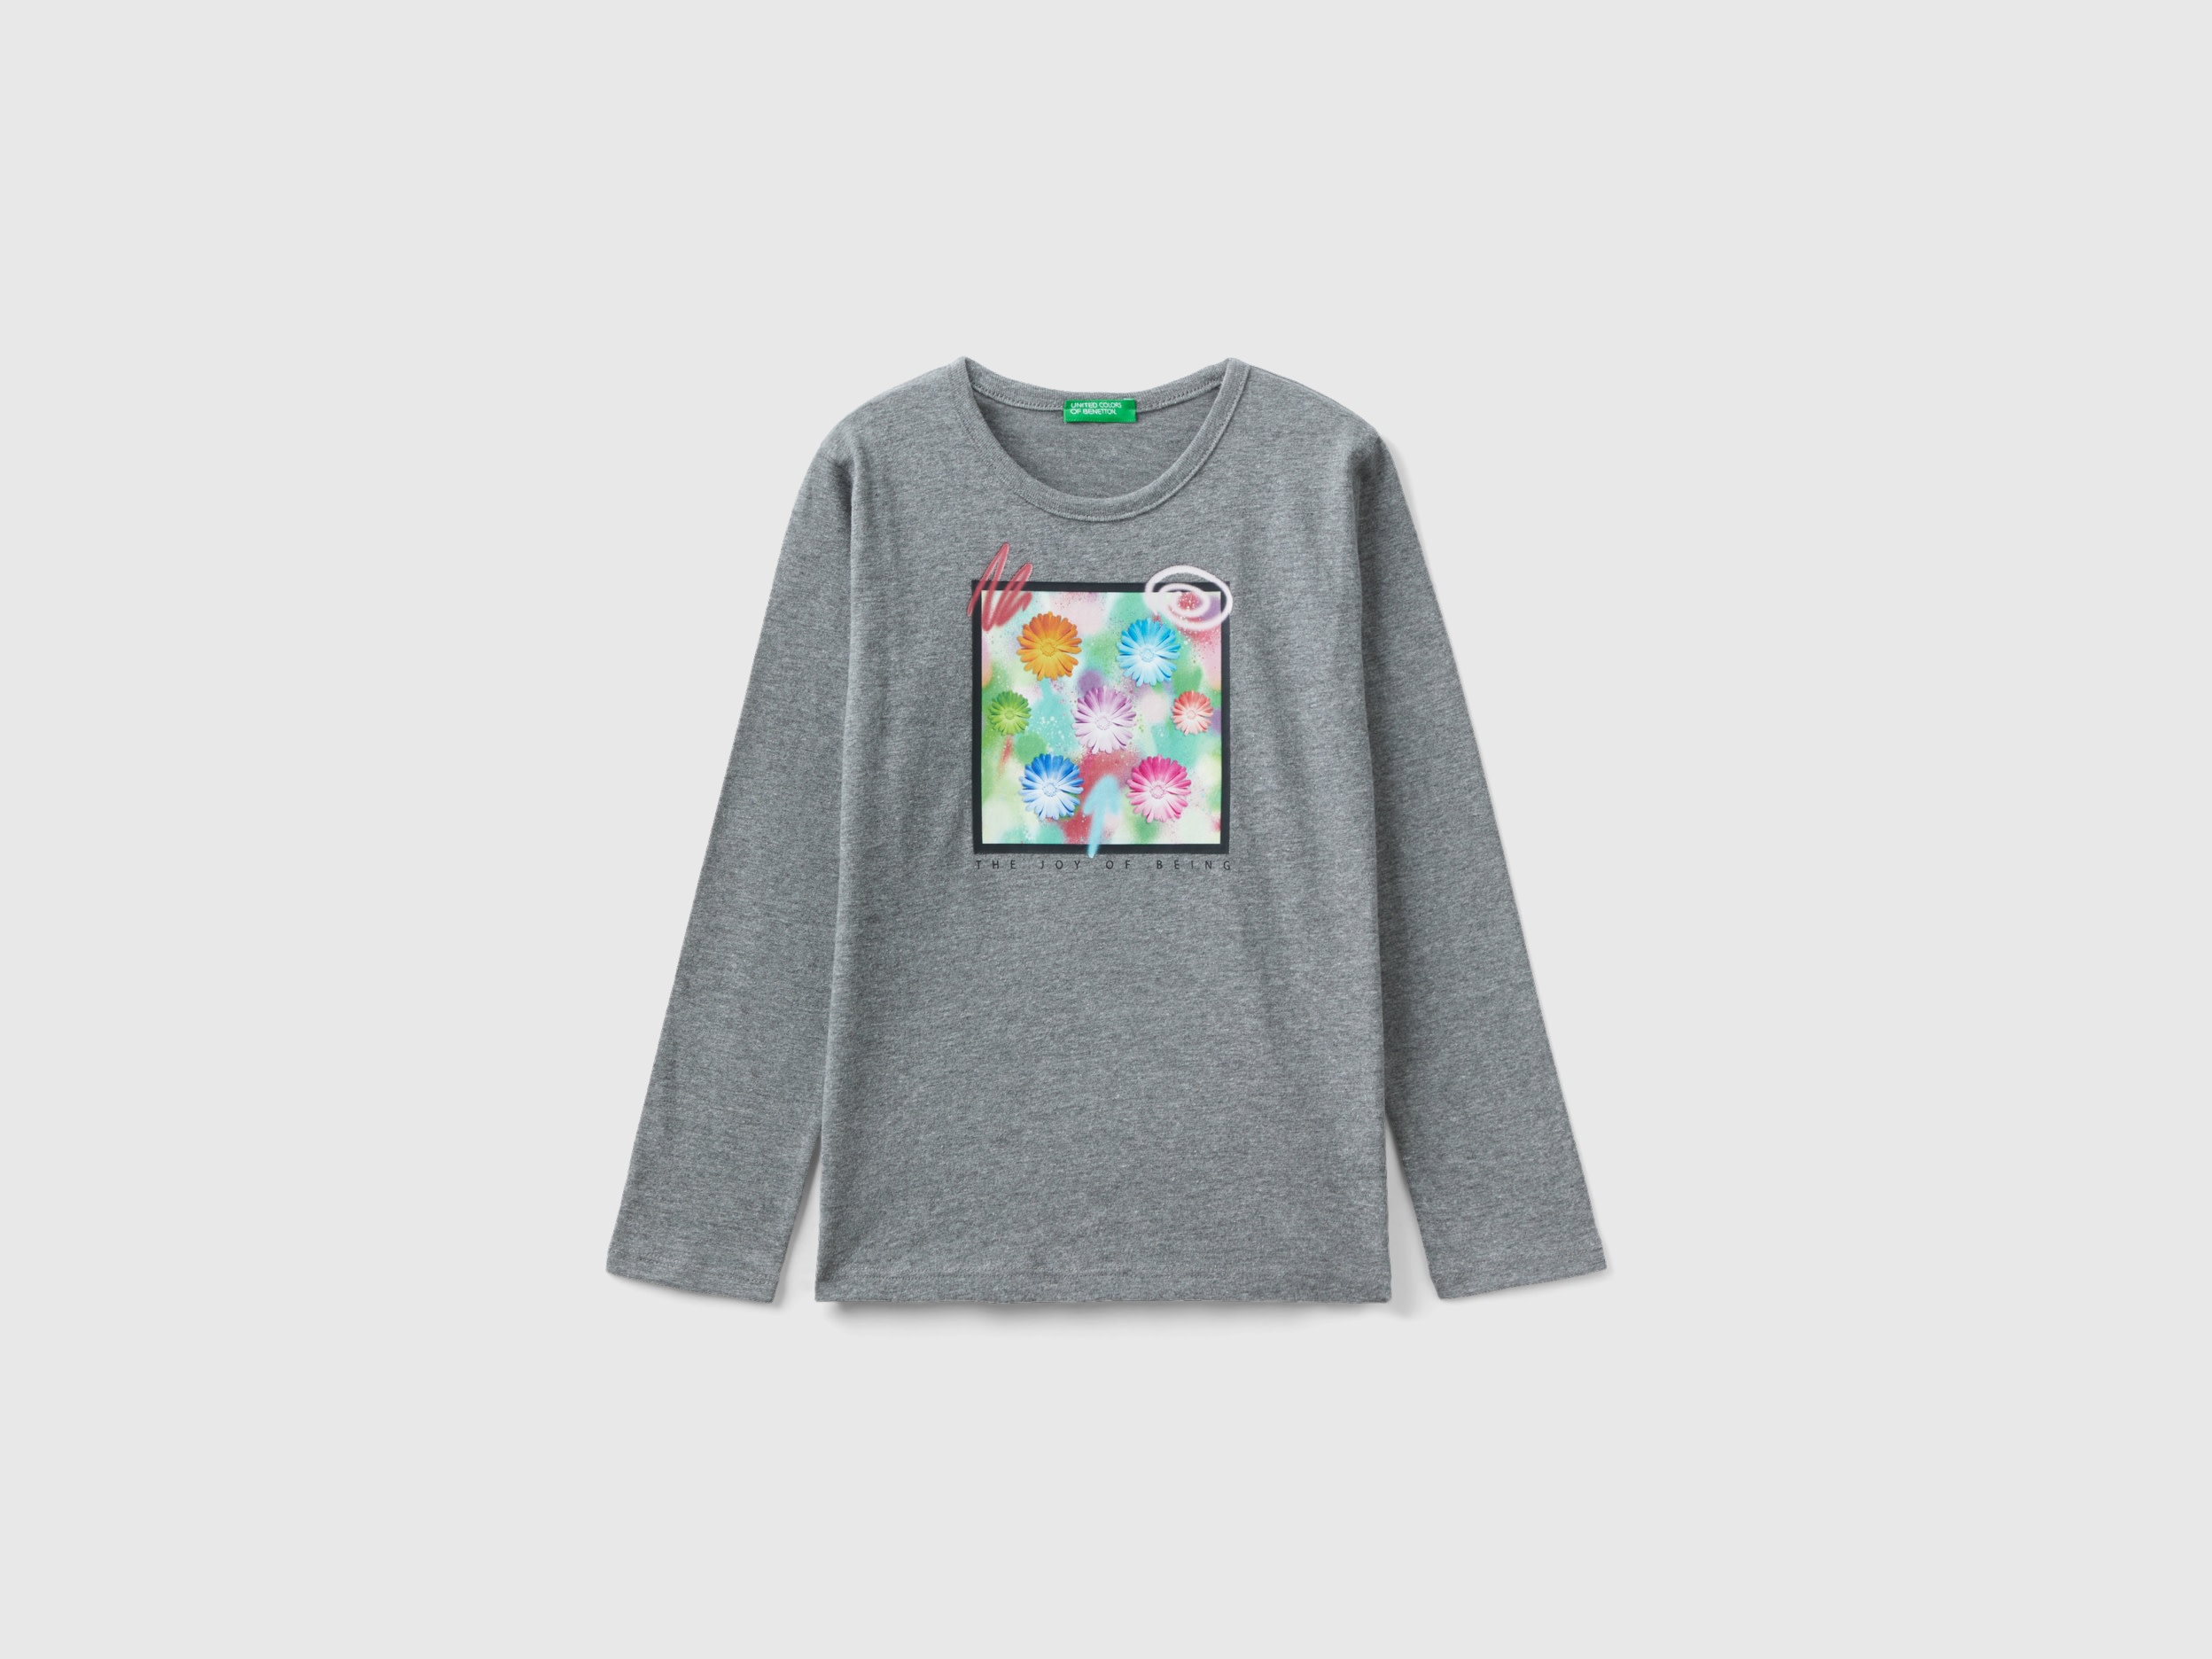 Benetton, Warm T-shirt With Photo Print, size 2XL, Dark Gray, Kids